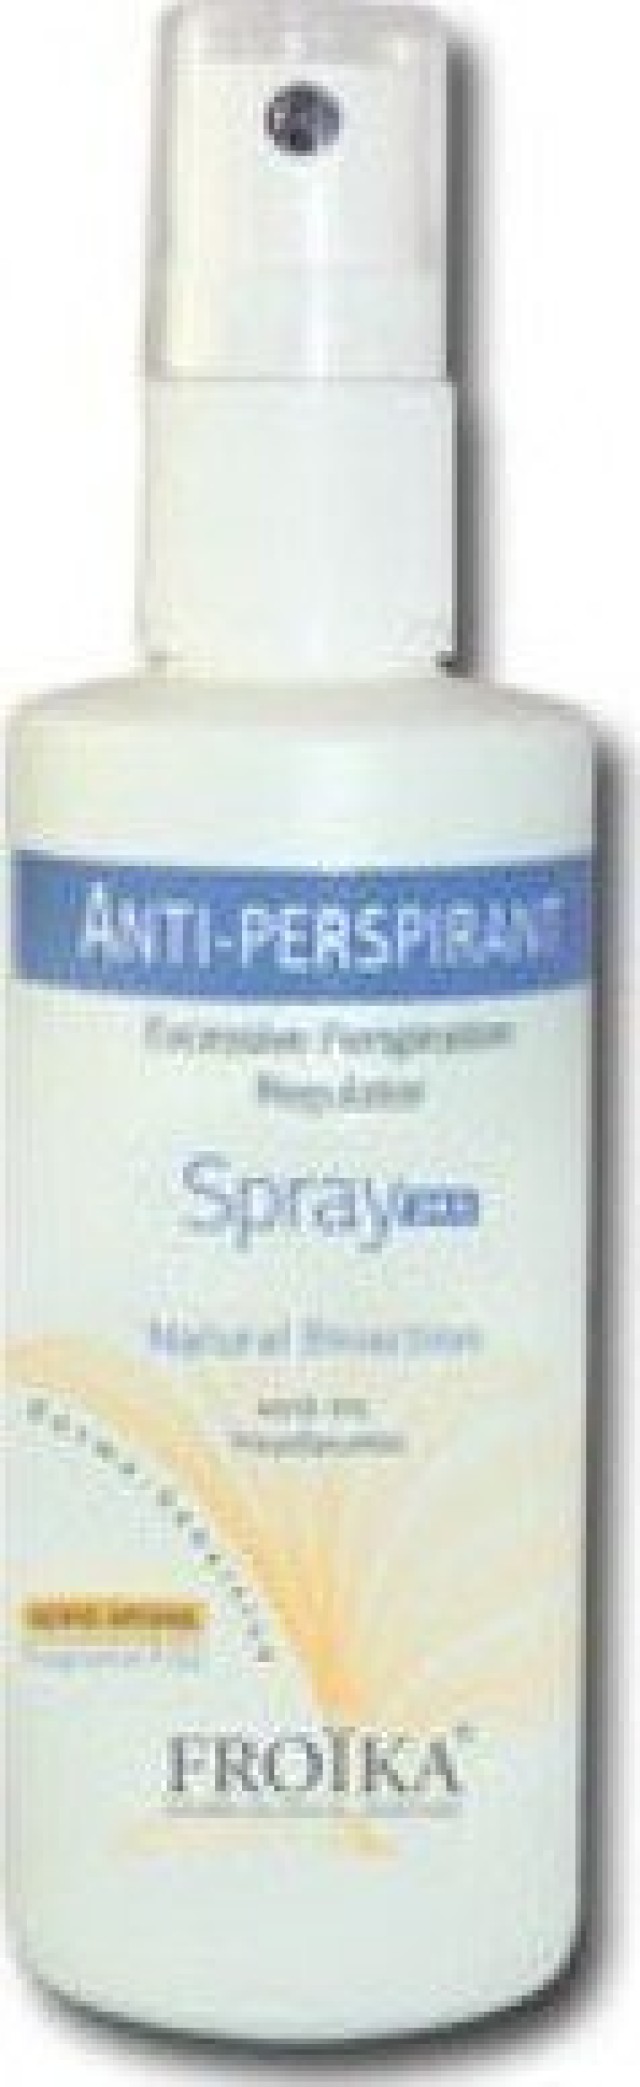 Froika ANTIPERSPIRANT Spray without Perfume, 60ml